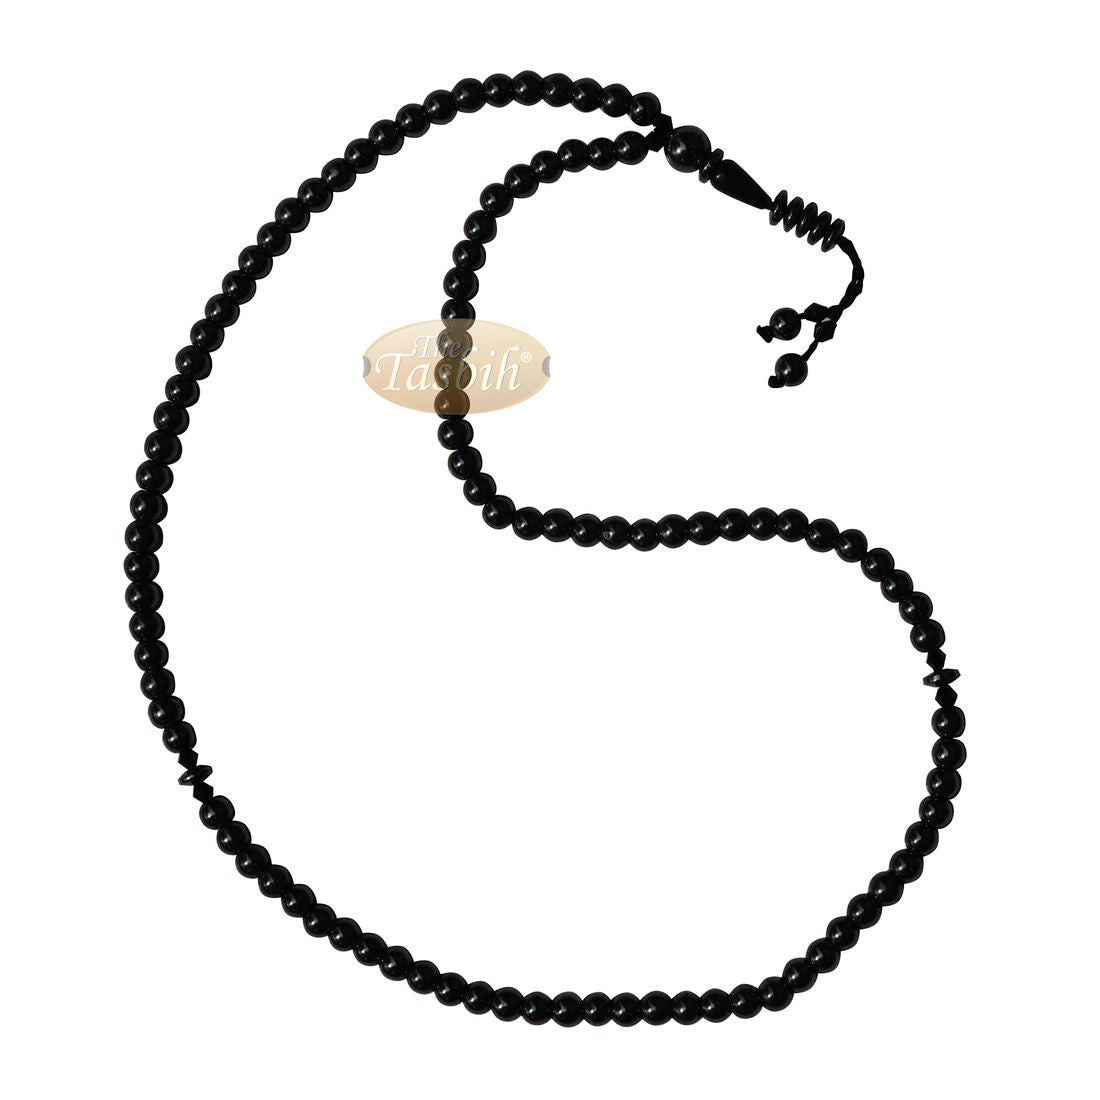 99-bead Tasbih Hematite 6mm Round Beads with Dividers Rosary